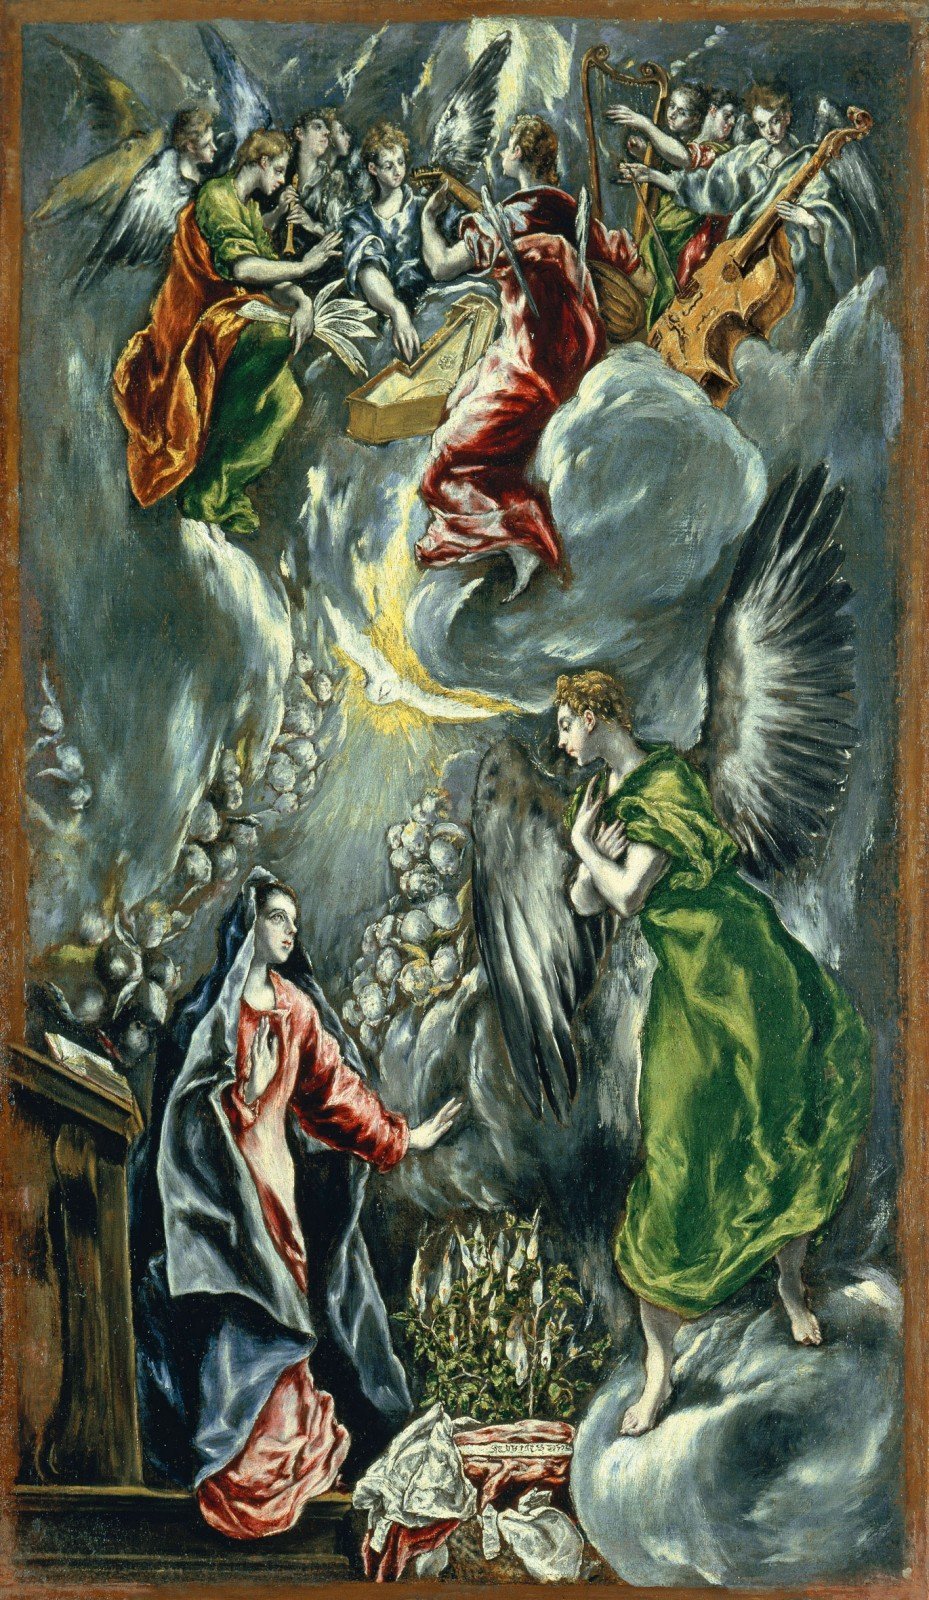 El Greco, “Annunciation”, 1596-1600, Museo Thyssen-Bornemisza